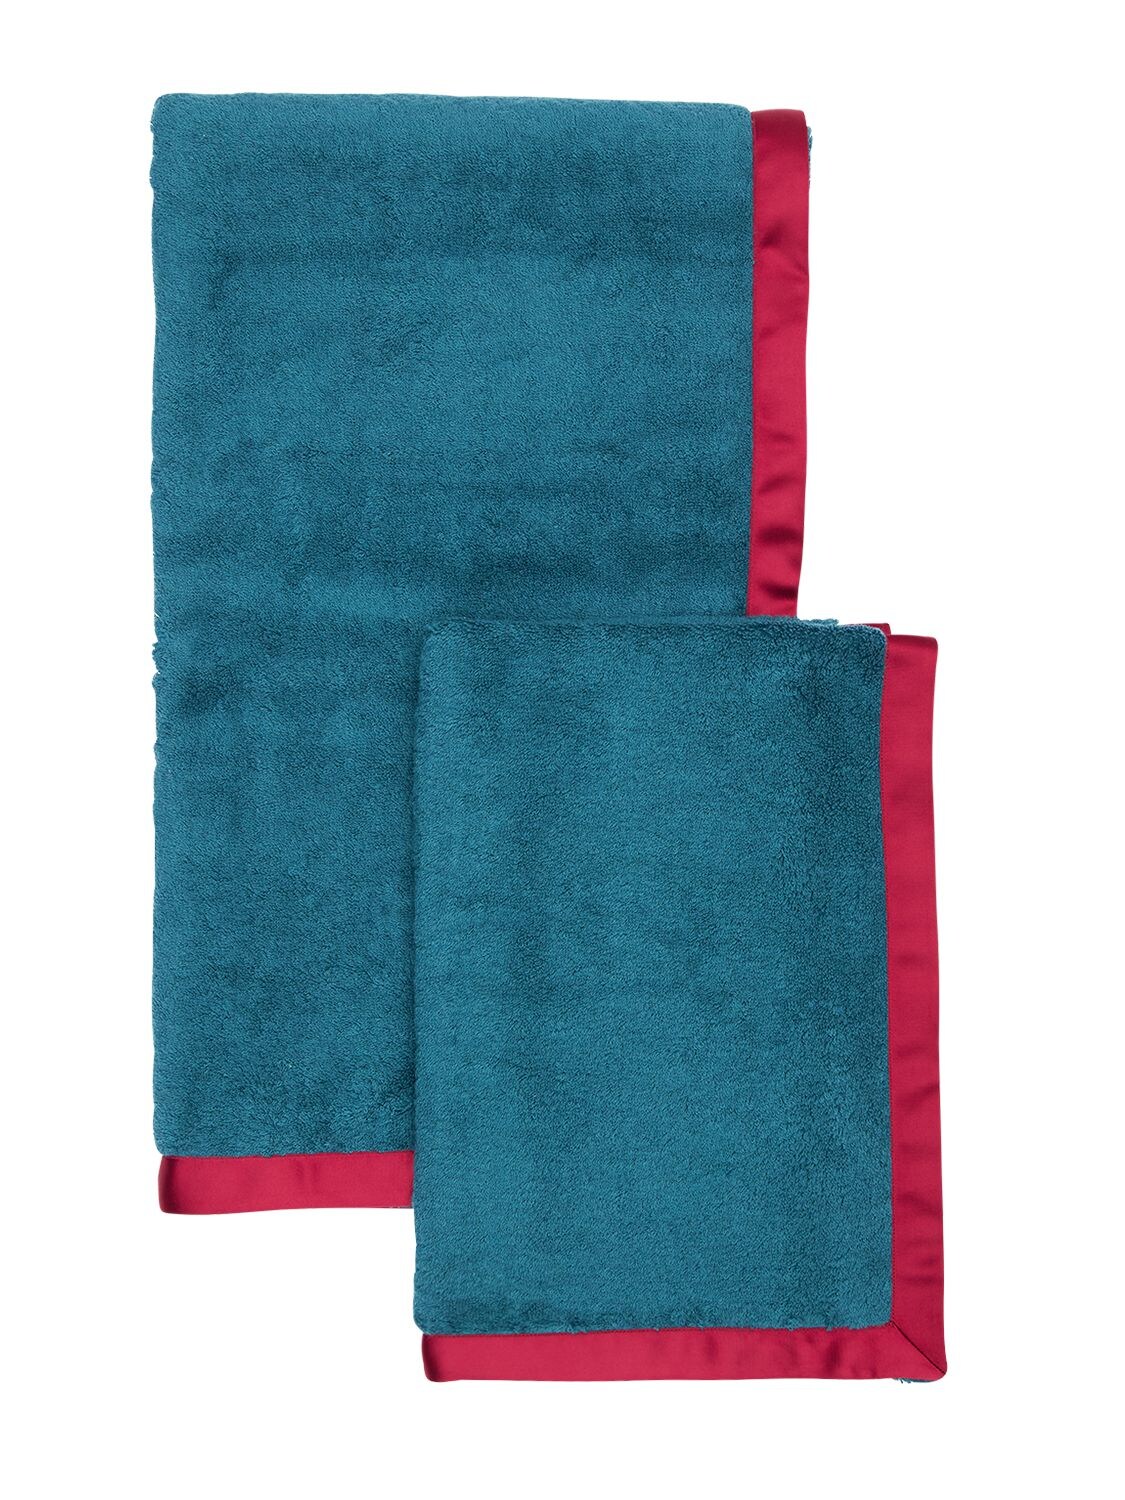 Alessandro Di Marco 棉质毛巾布毛巾2条套装 In Petrolblue,red